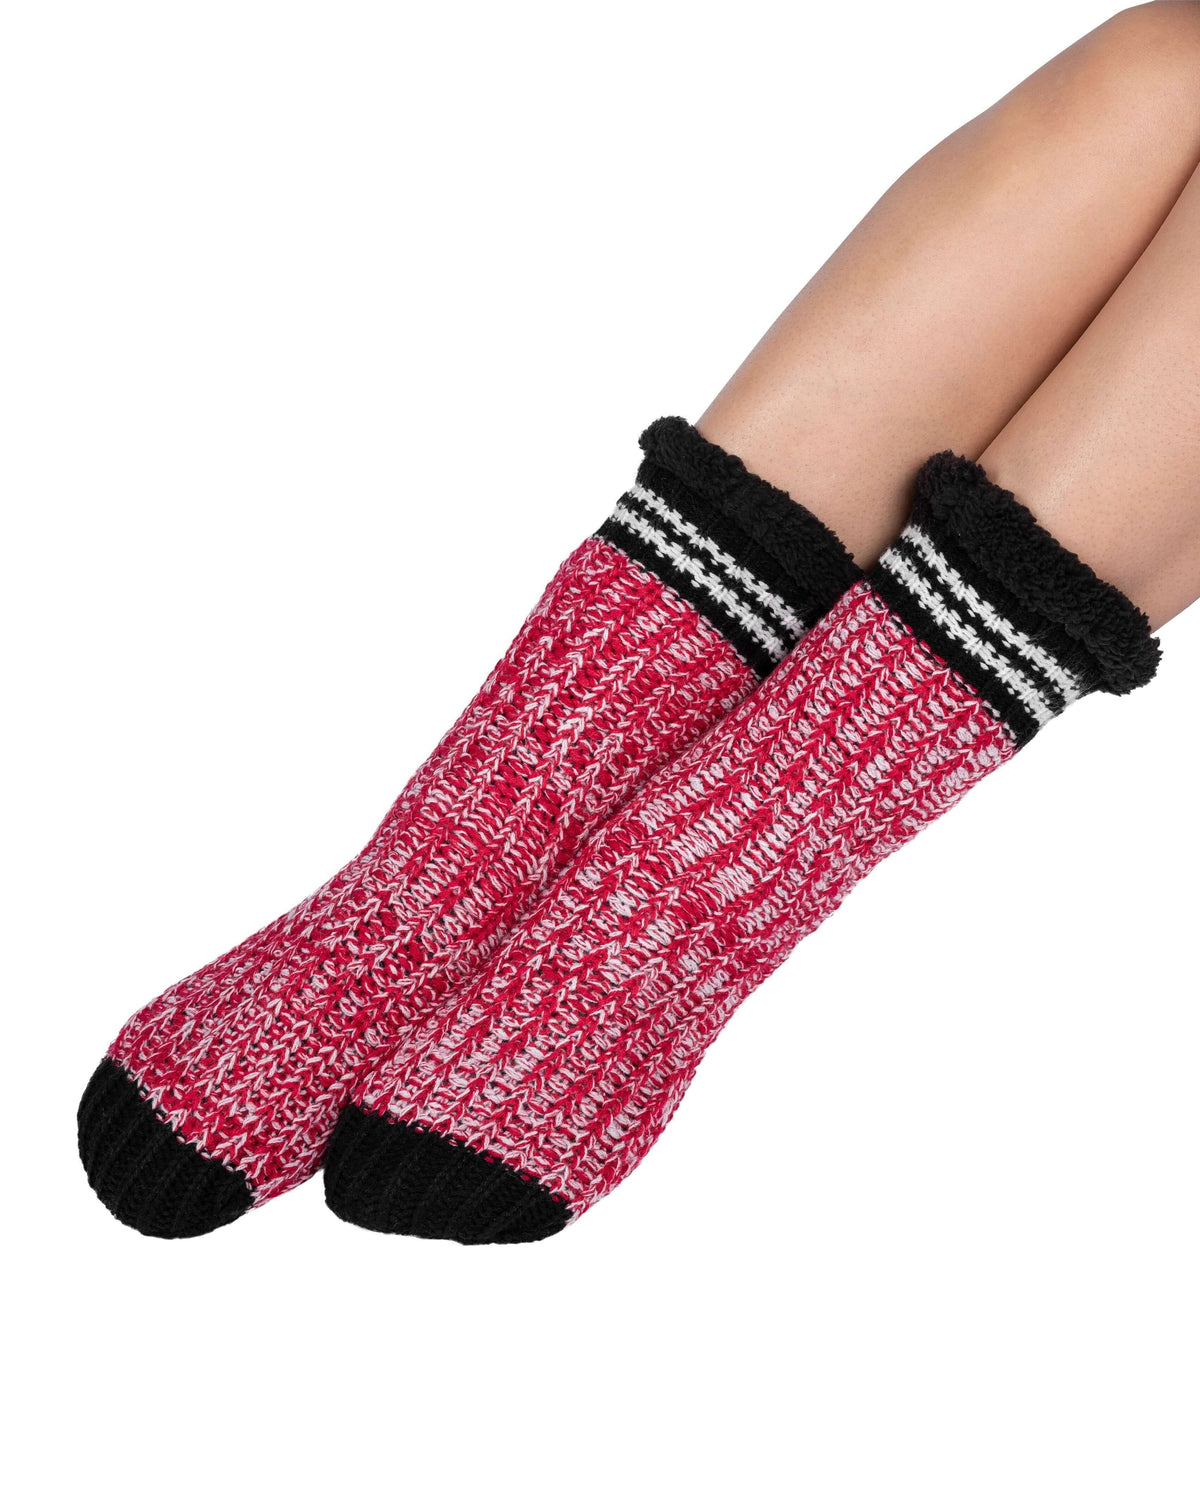 Canadiana Lounge Socks - Deep Red - LATTELOVE Co.